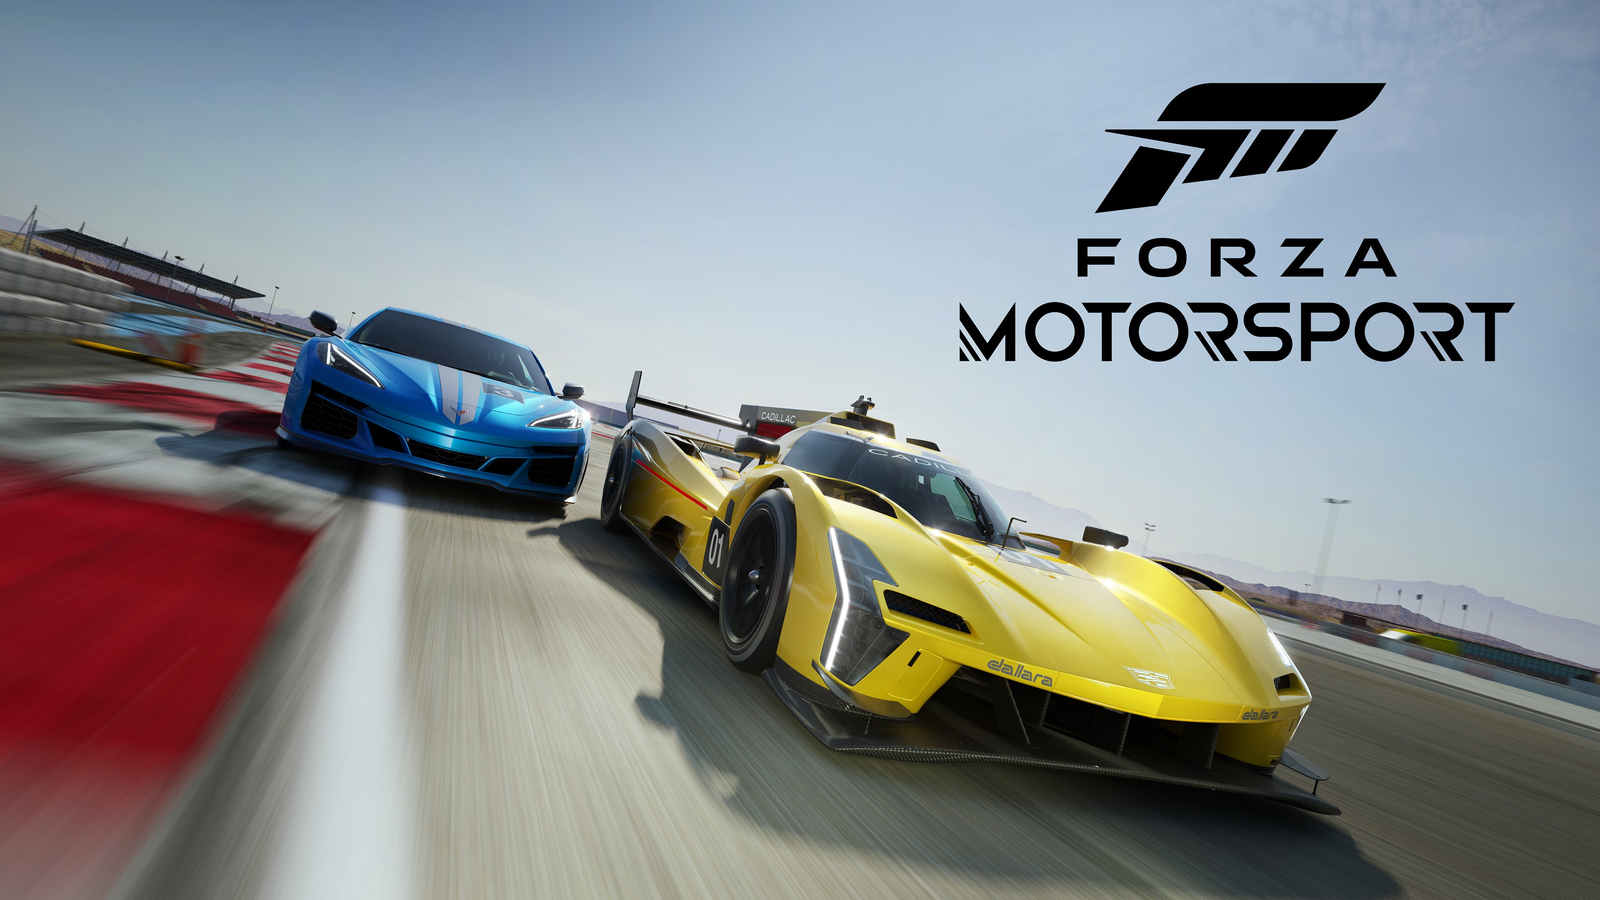 Forza Motorsport Official Artwork